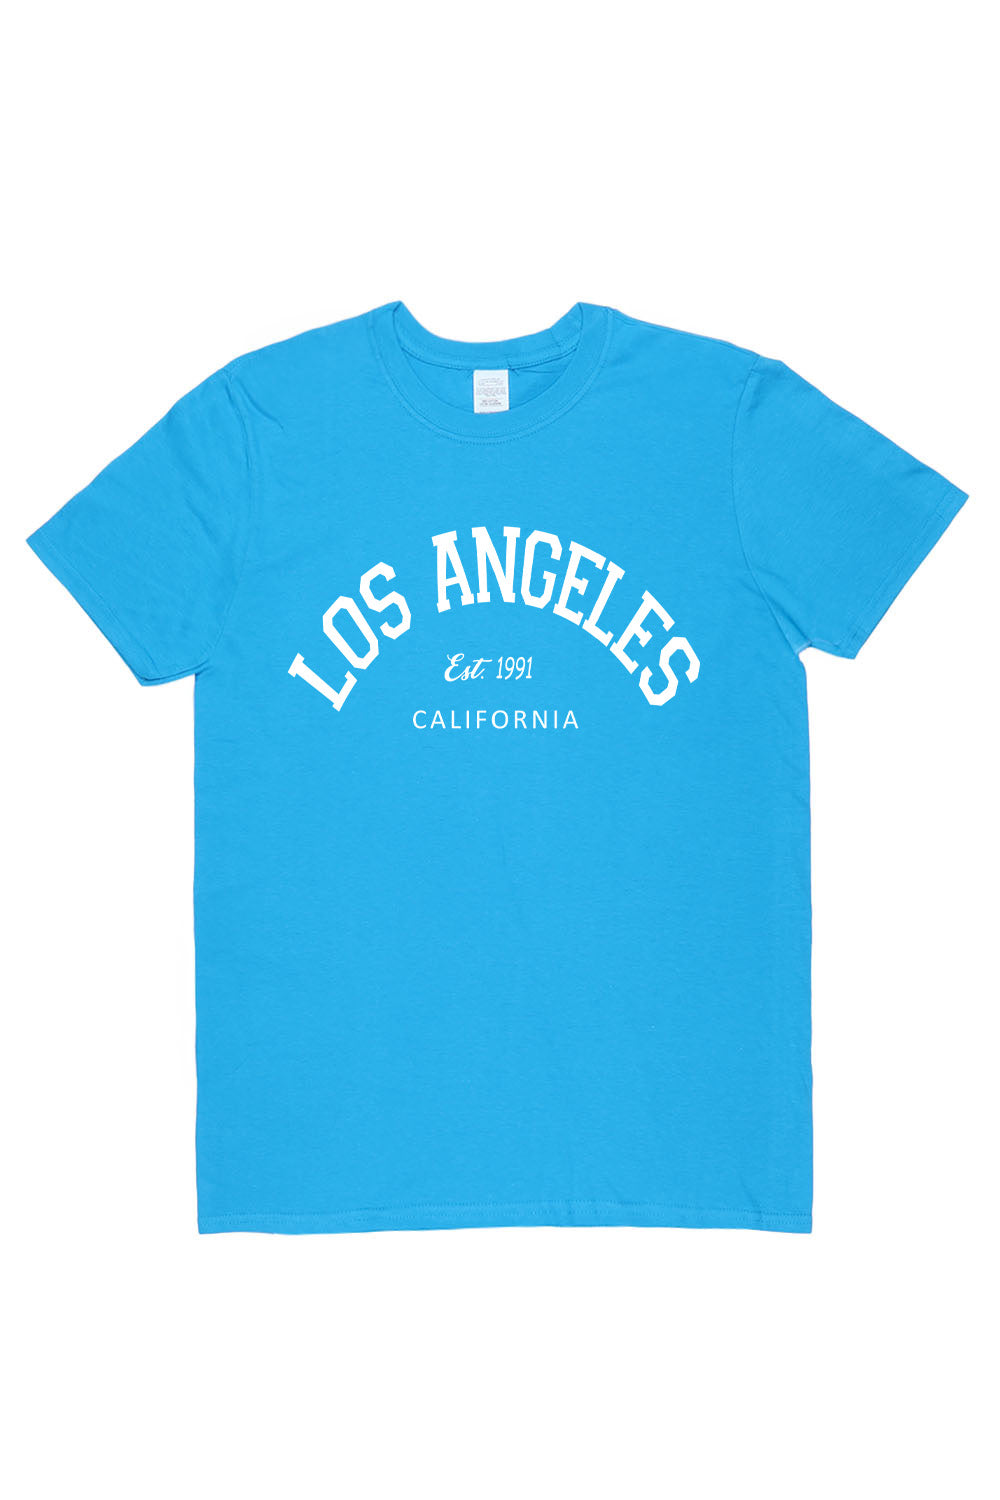 Los Angeles T-Shirt in Sapphire Blue (Custom Packs)